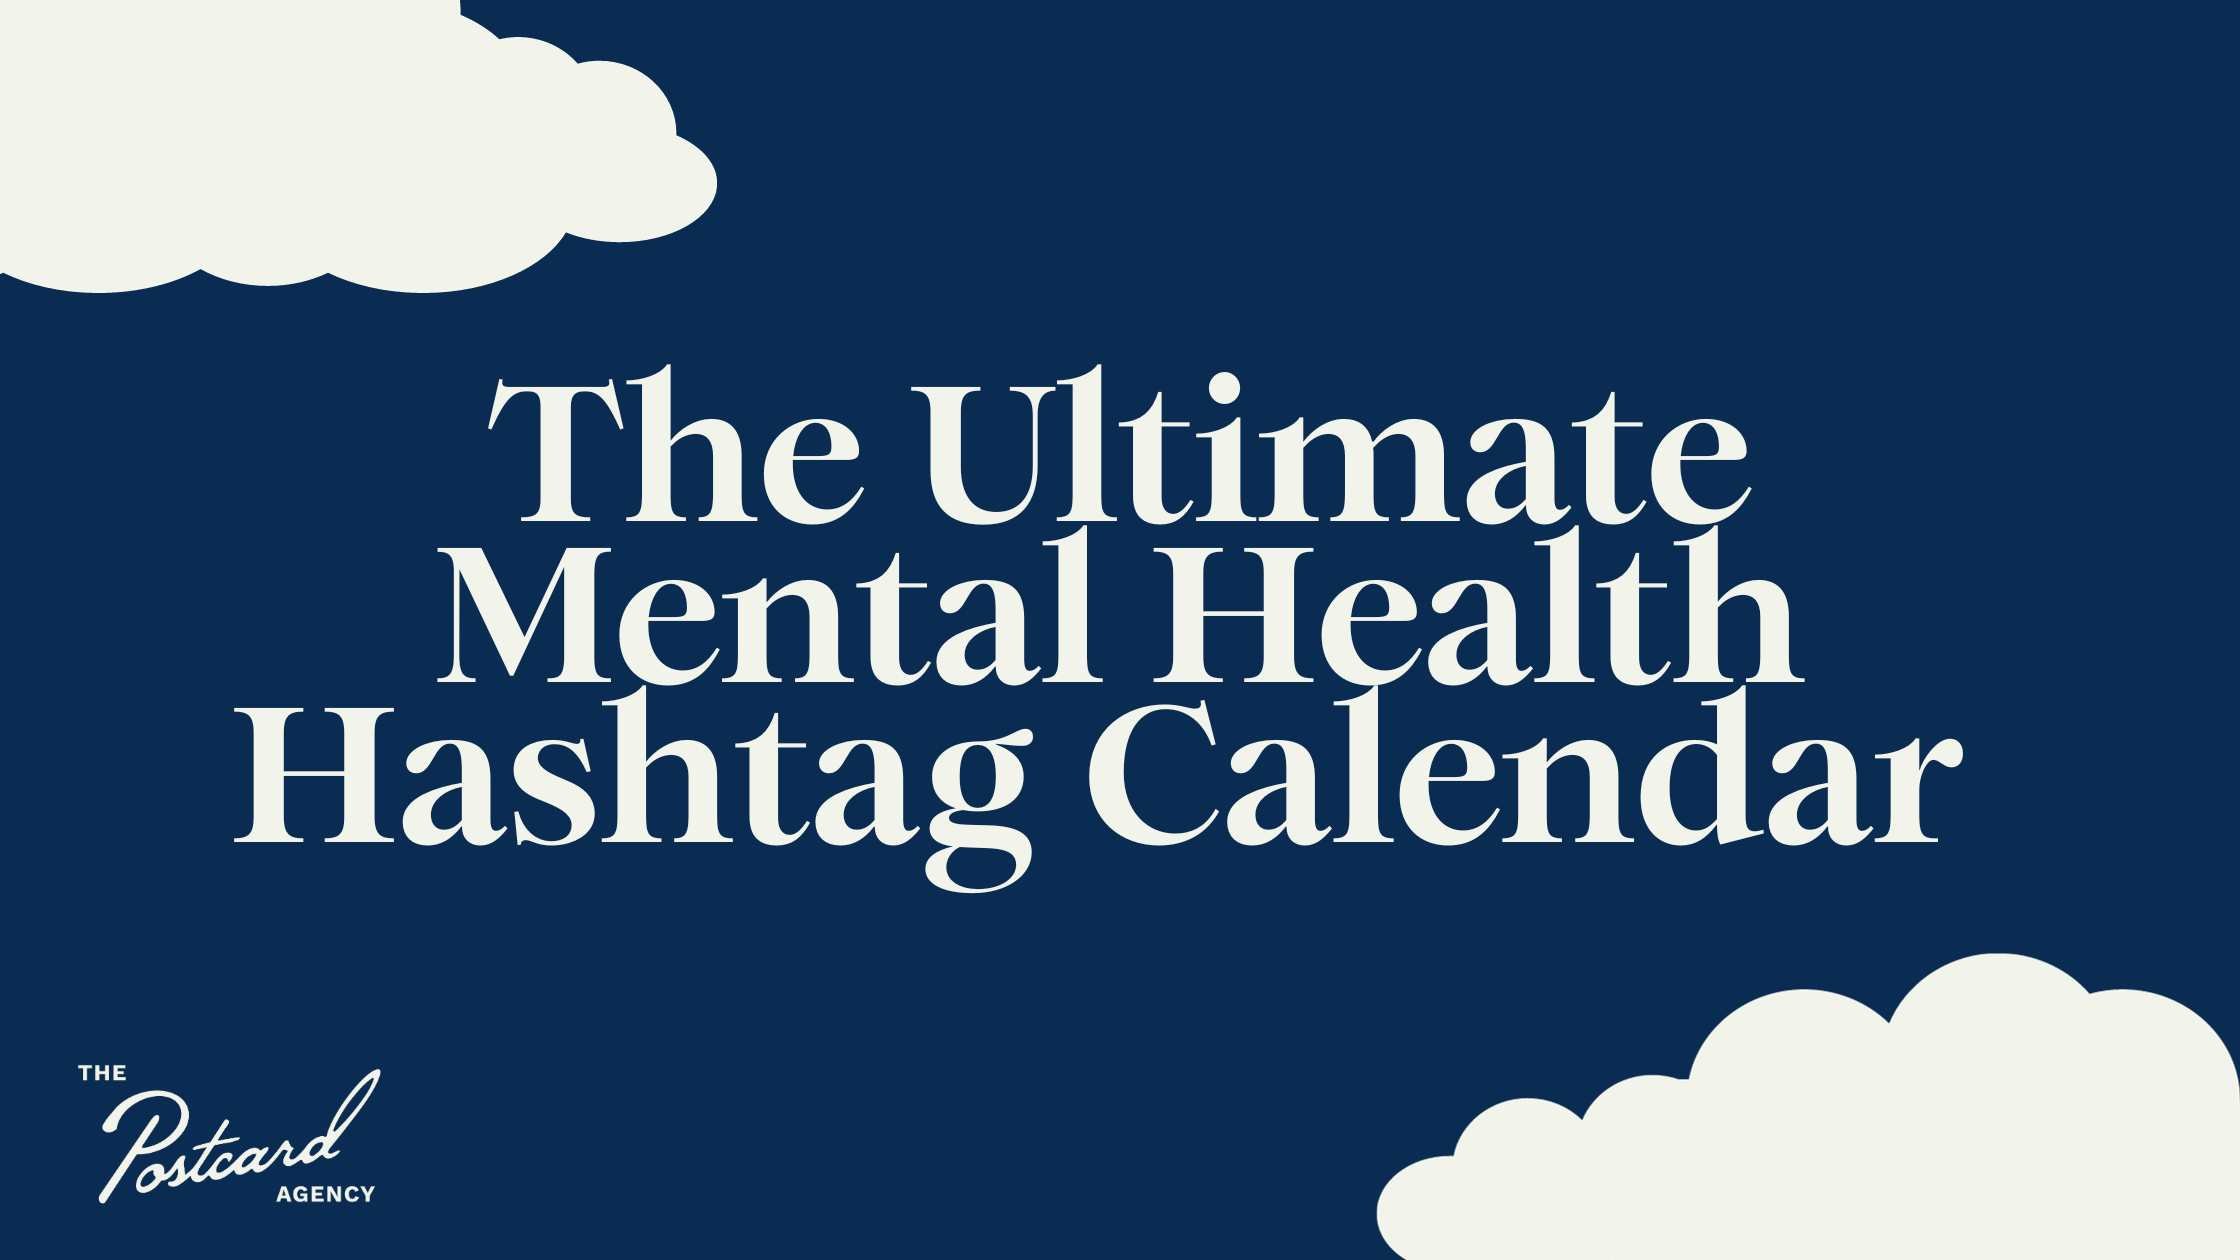 The Ultimate Mental Health Hashtag Calendar